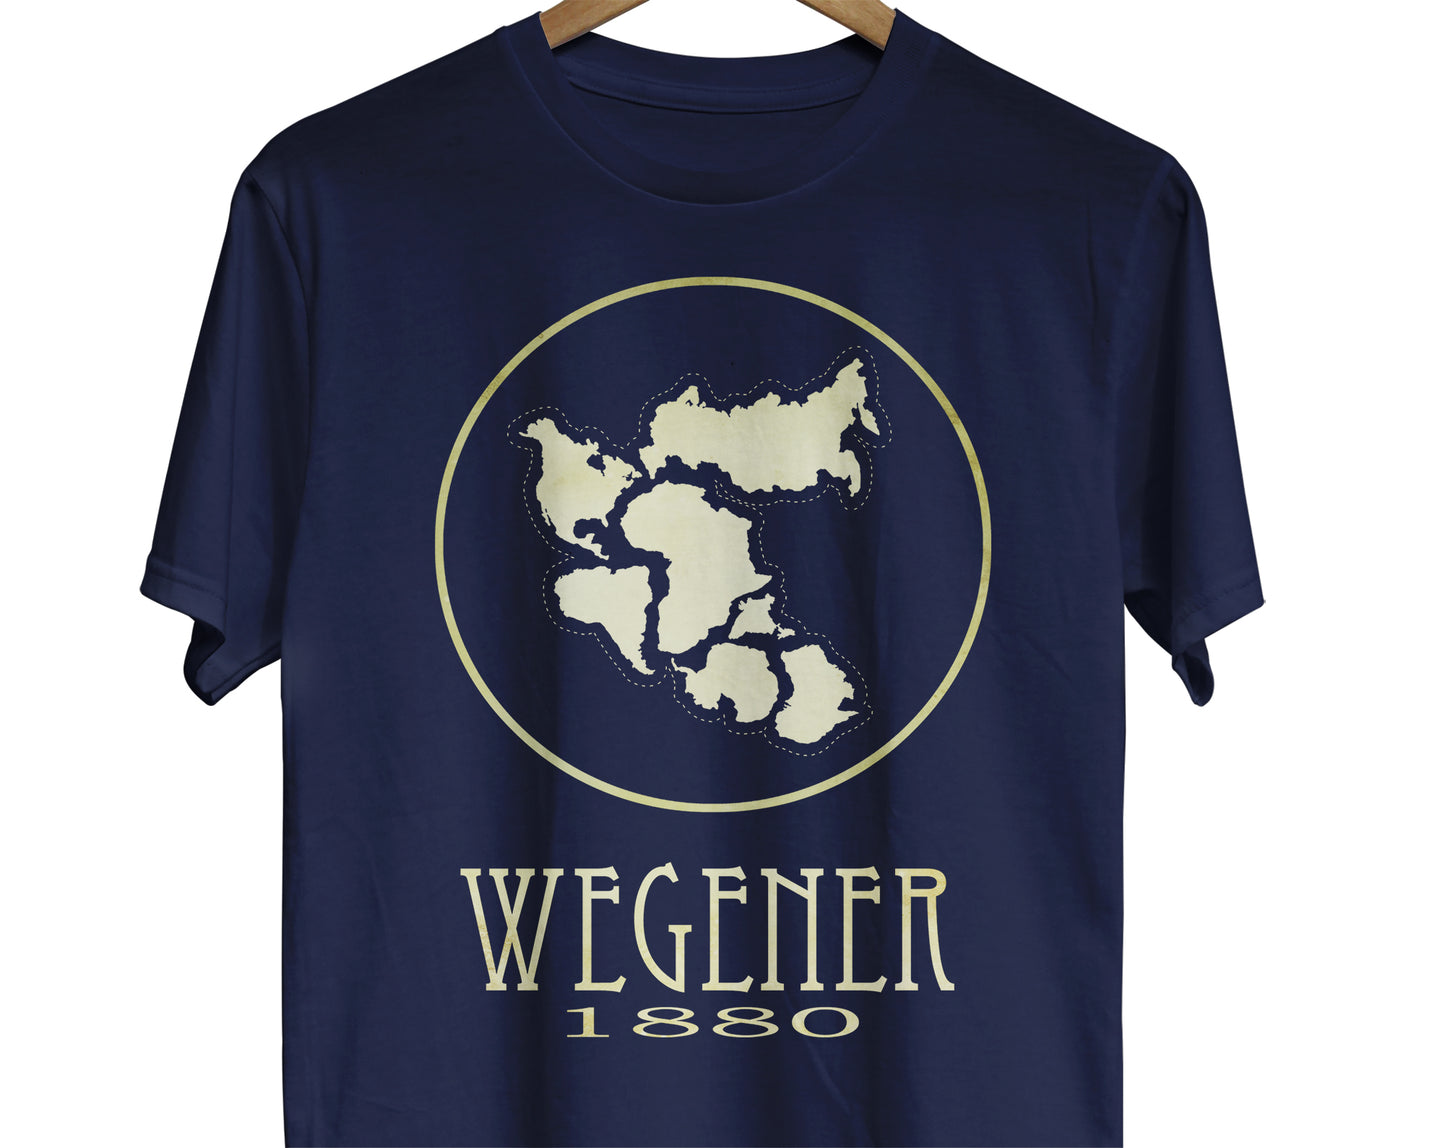 Alfred Wegener pangea t-shirt for geologist or science teacher